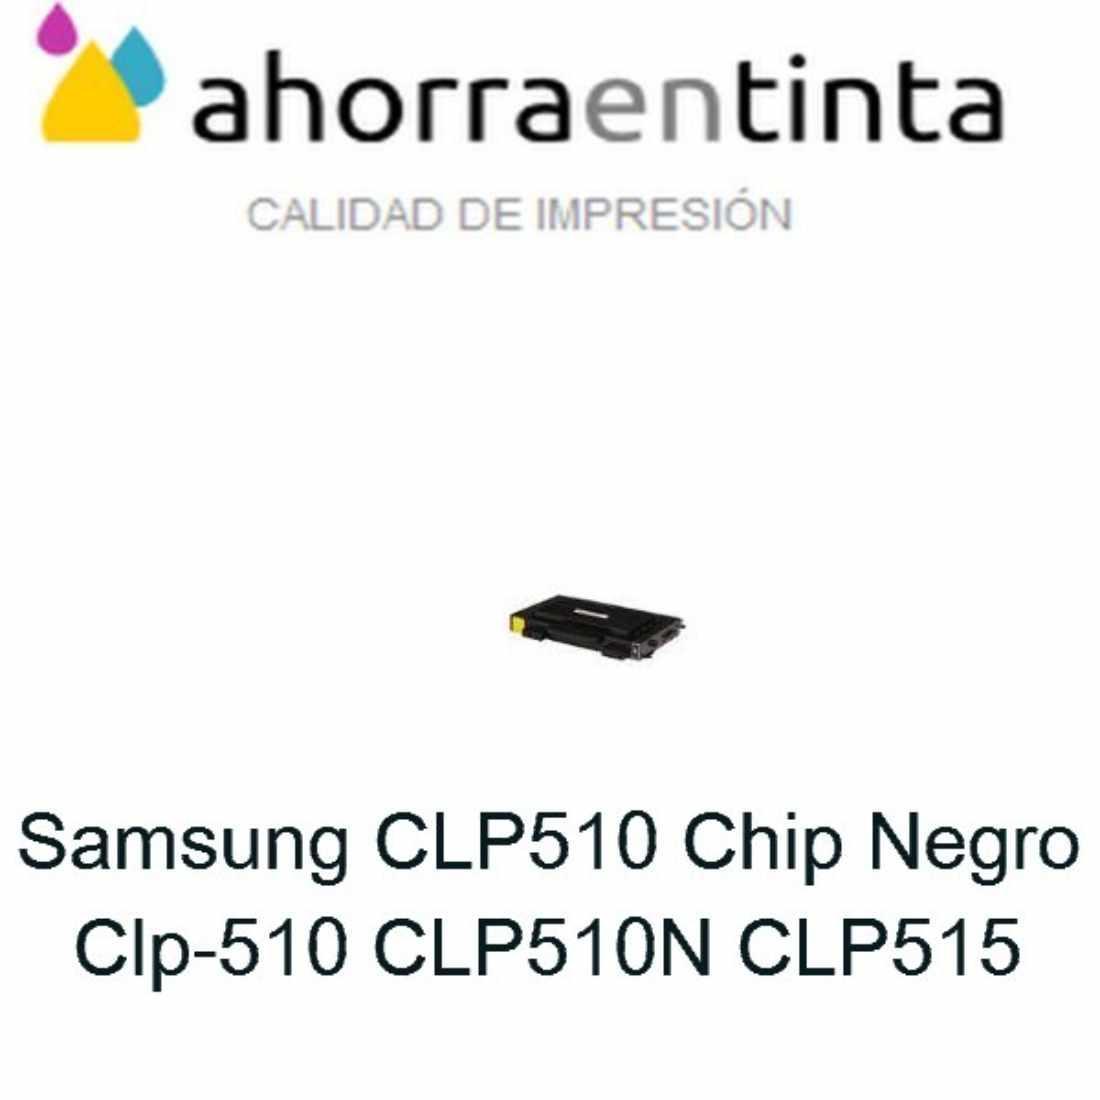 Foto de producto Samsung CLP510 Chip Negro Clp-